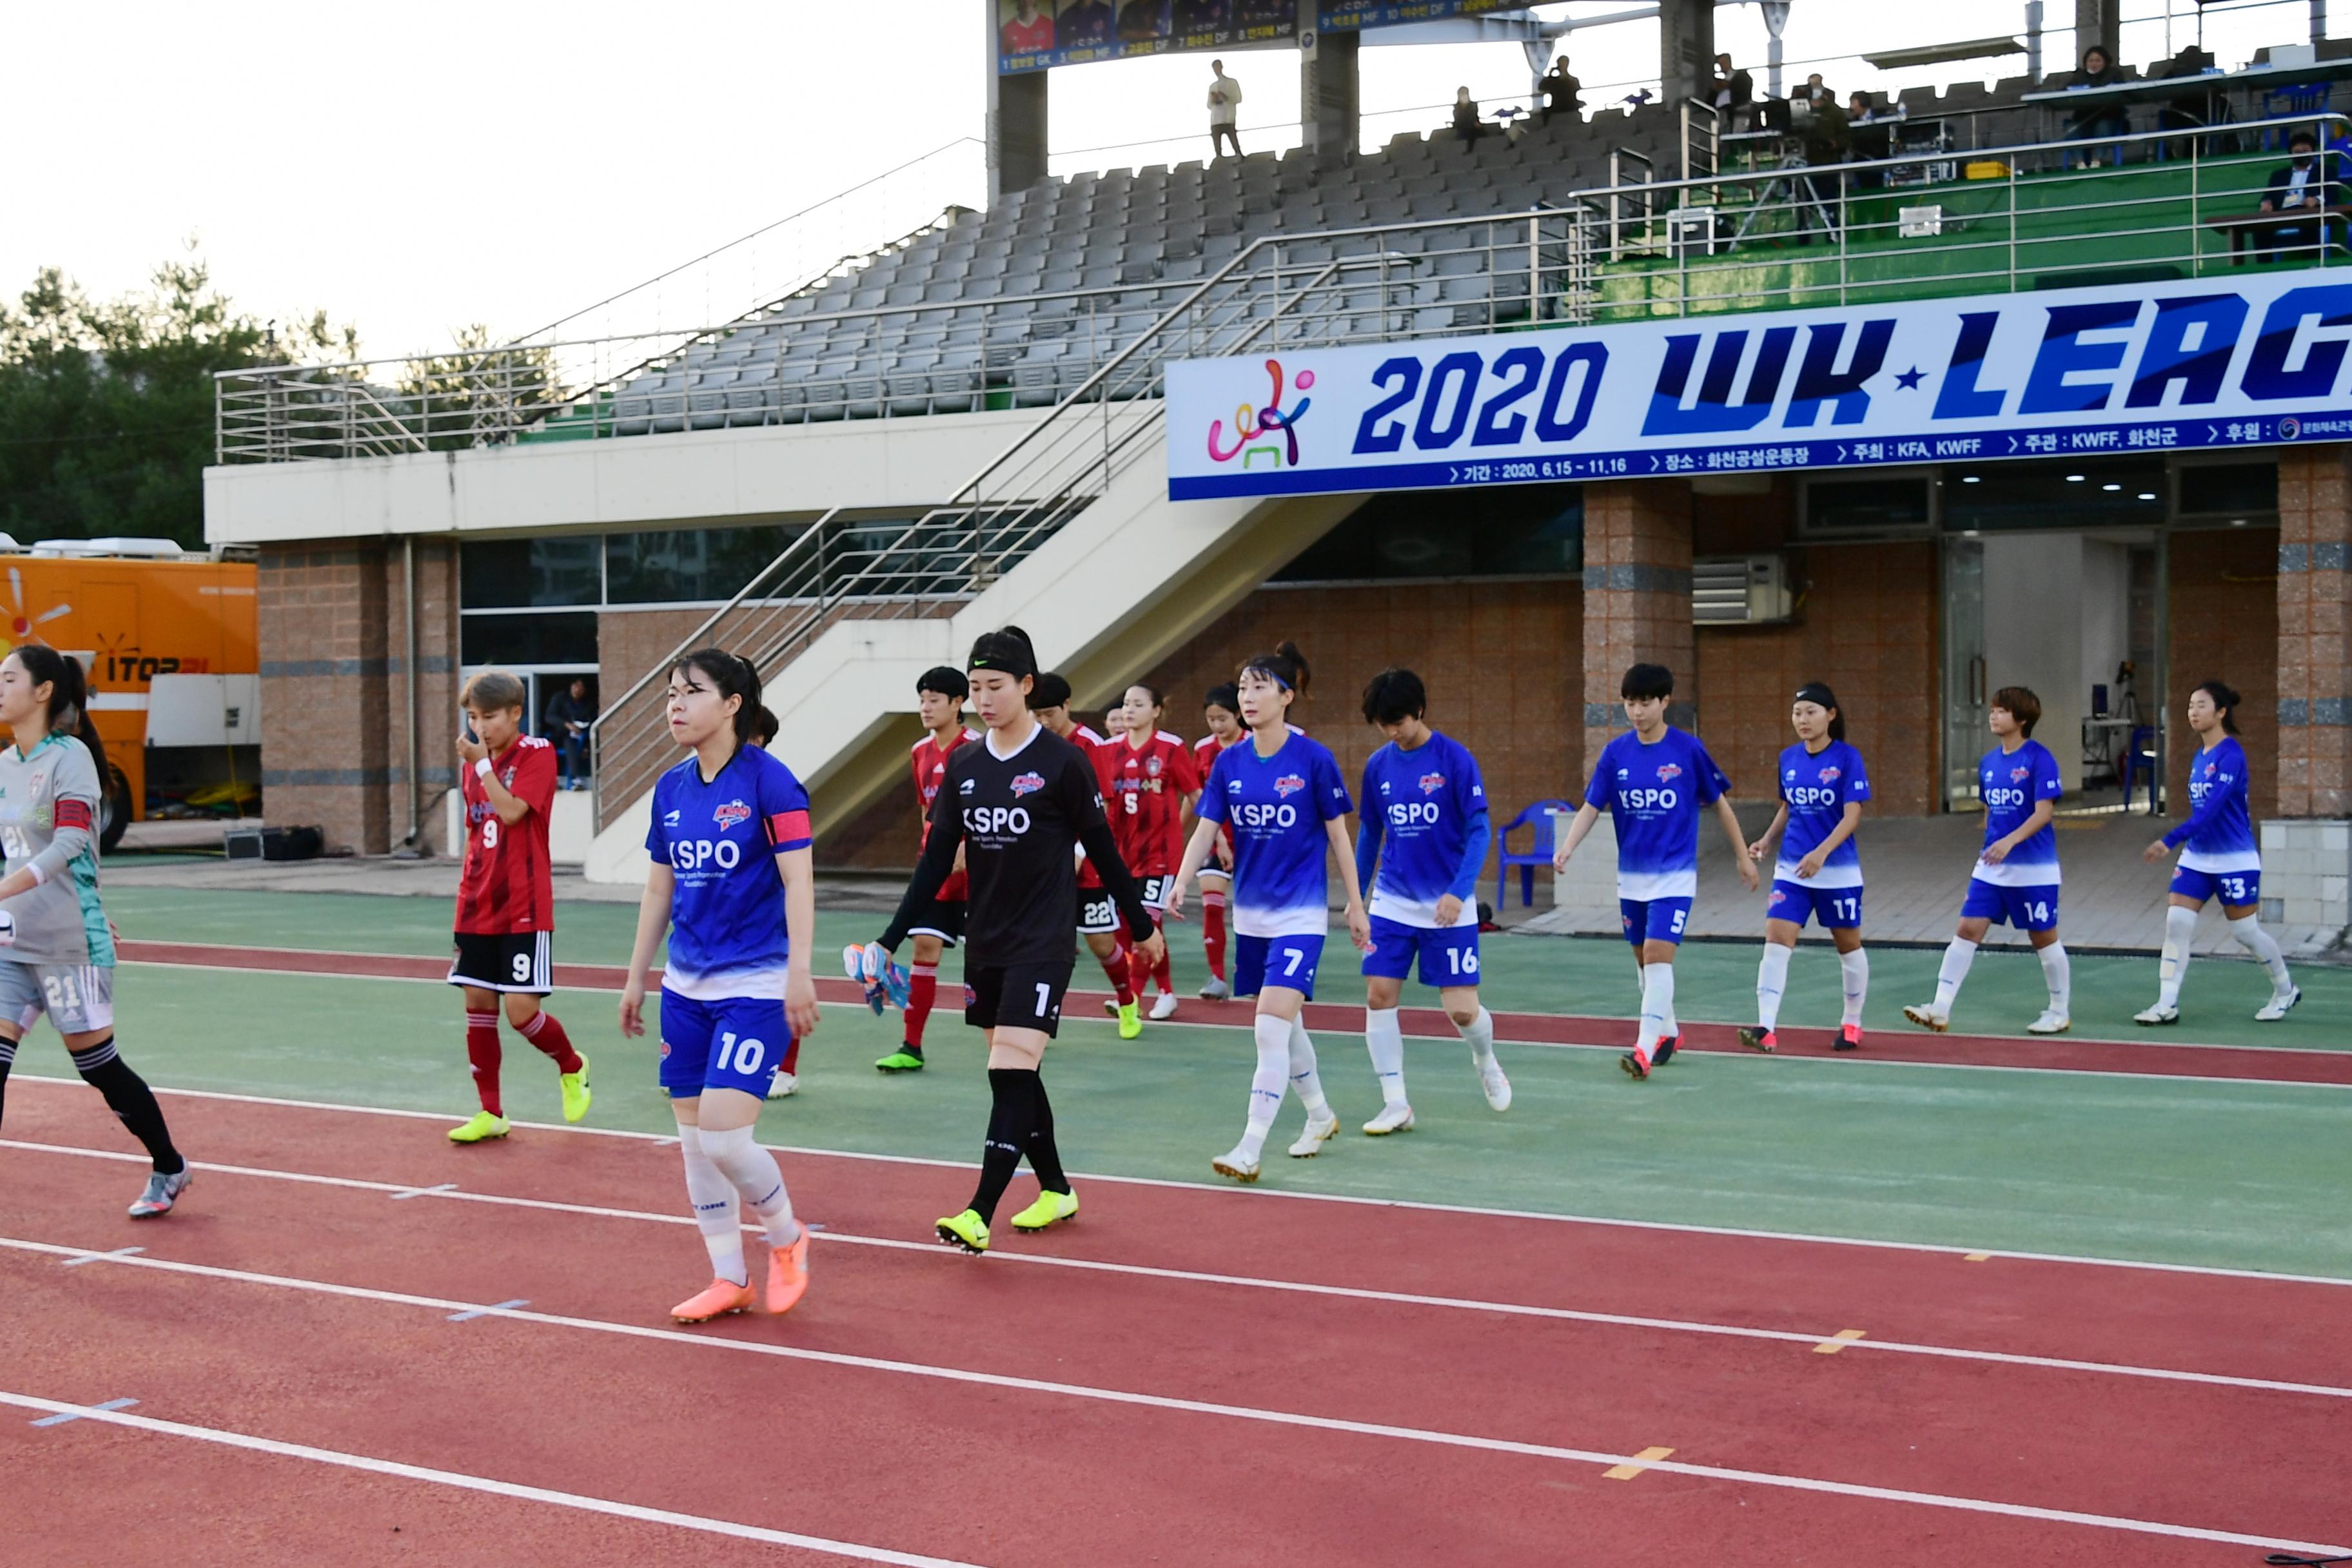 2020 WK리그 화천 KSPO vs 수원 도시공사 홈경기 의 사진